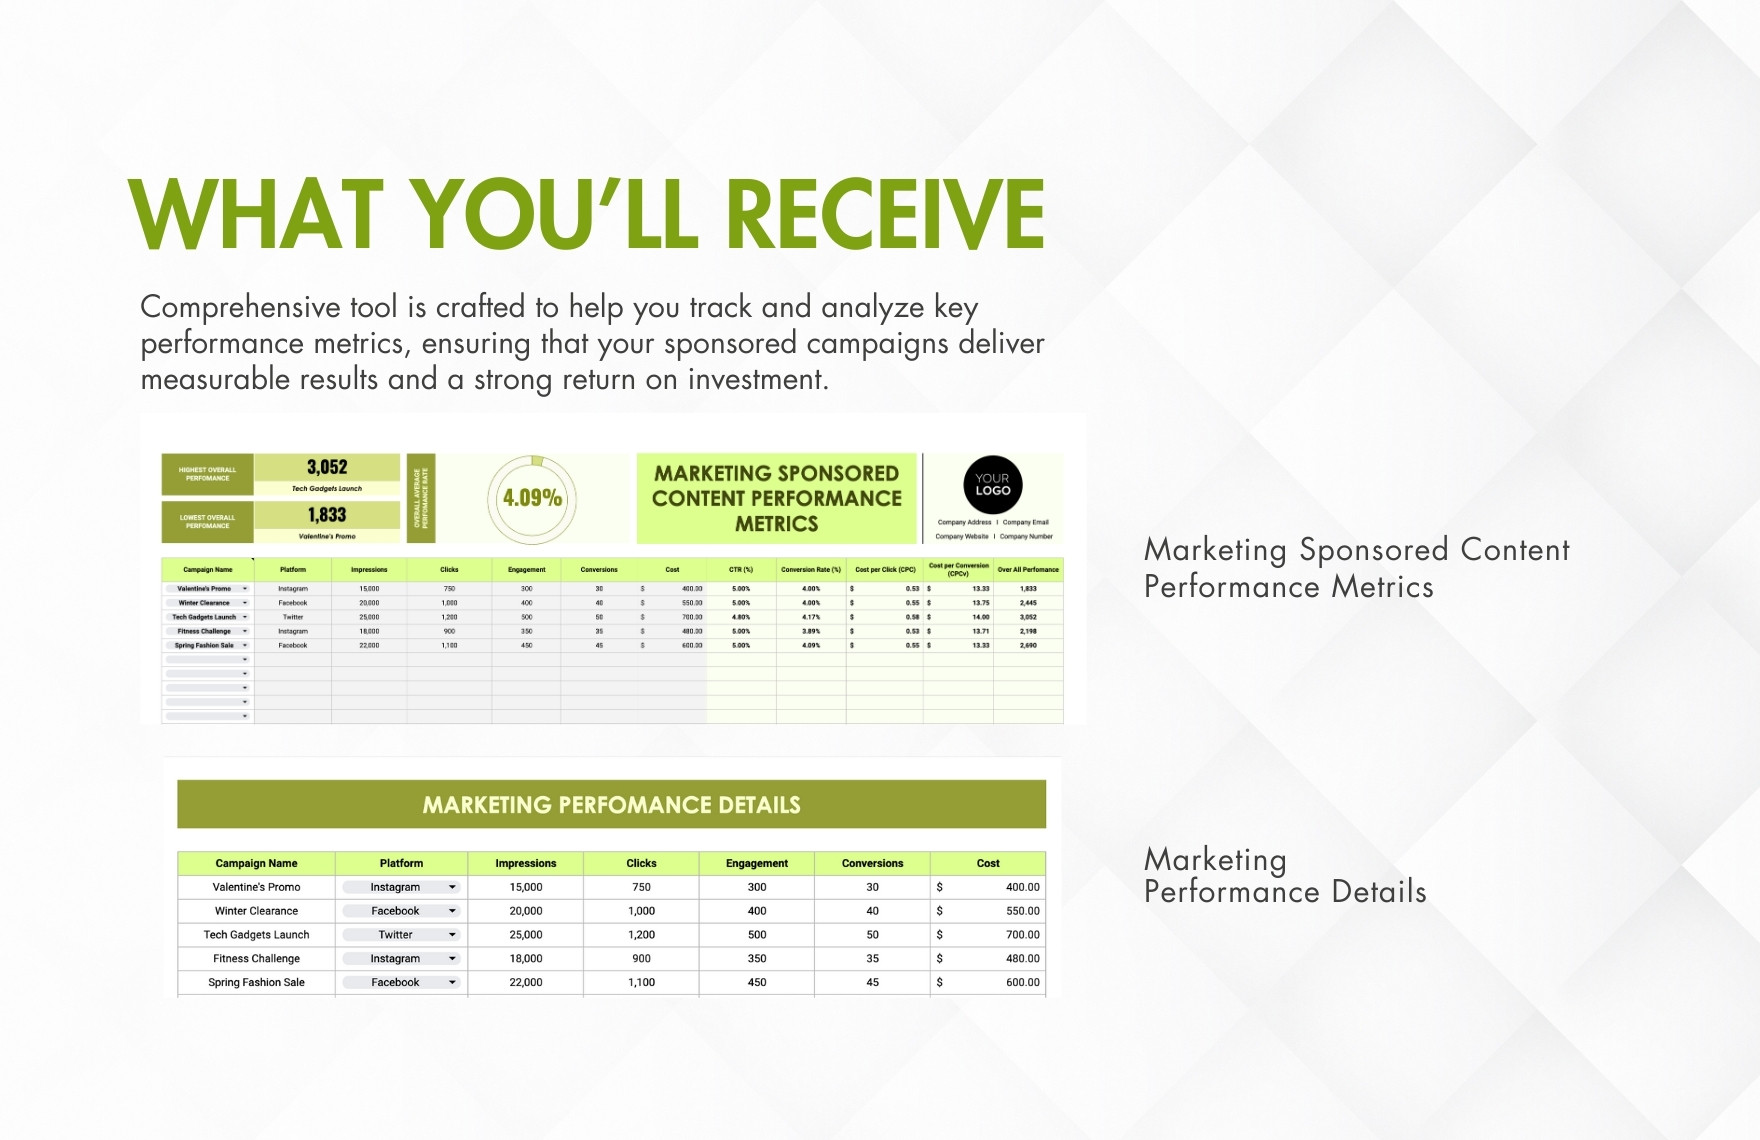 Marketing Sponsored Content Performance Metrics Template